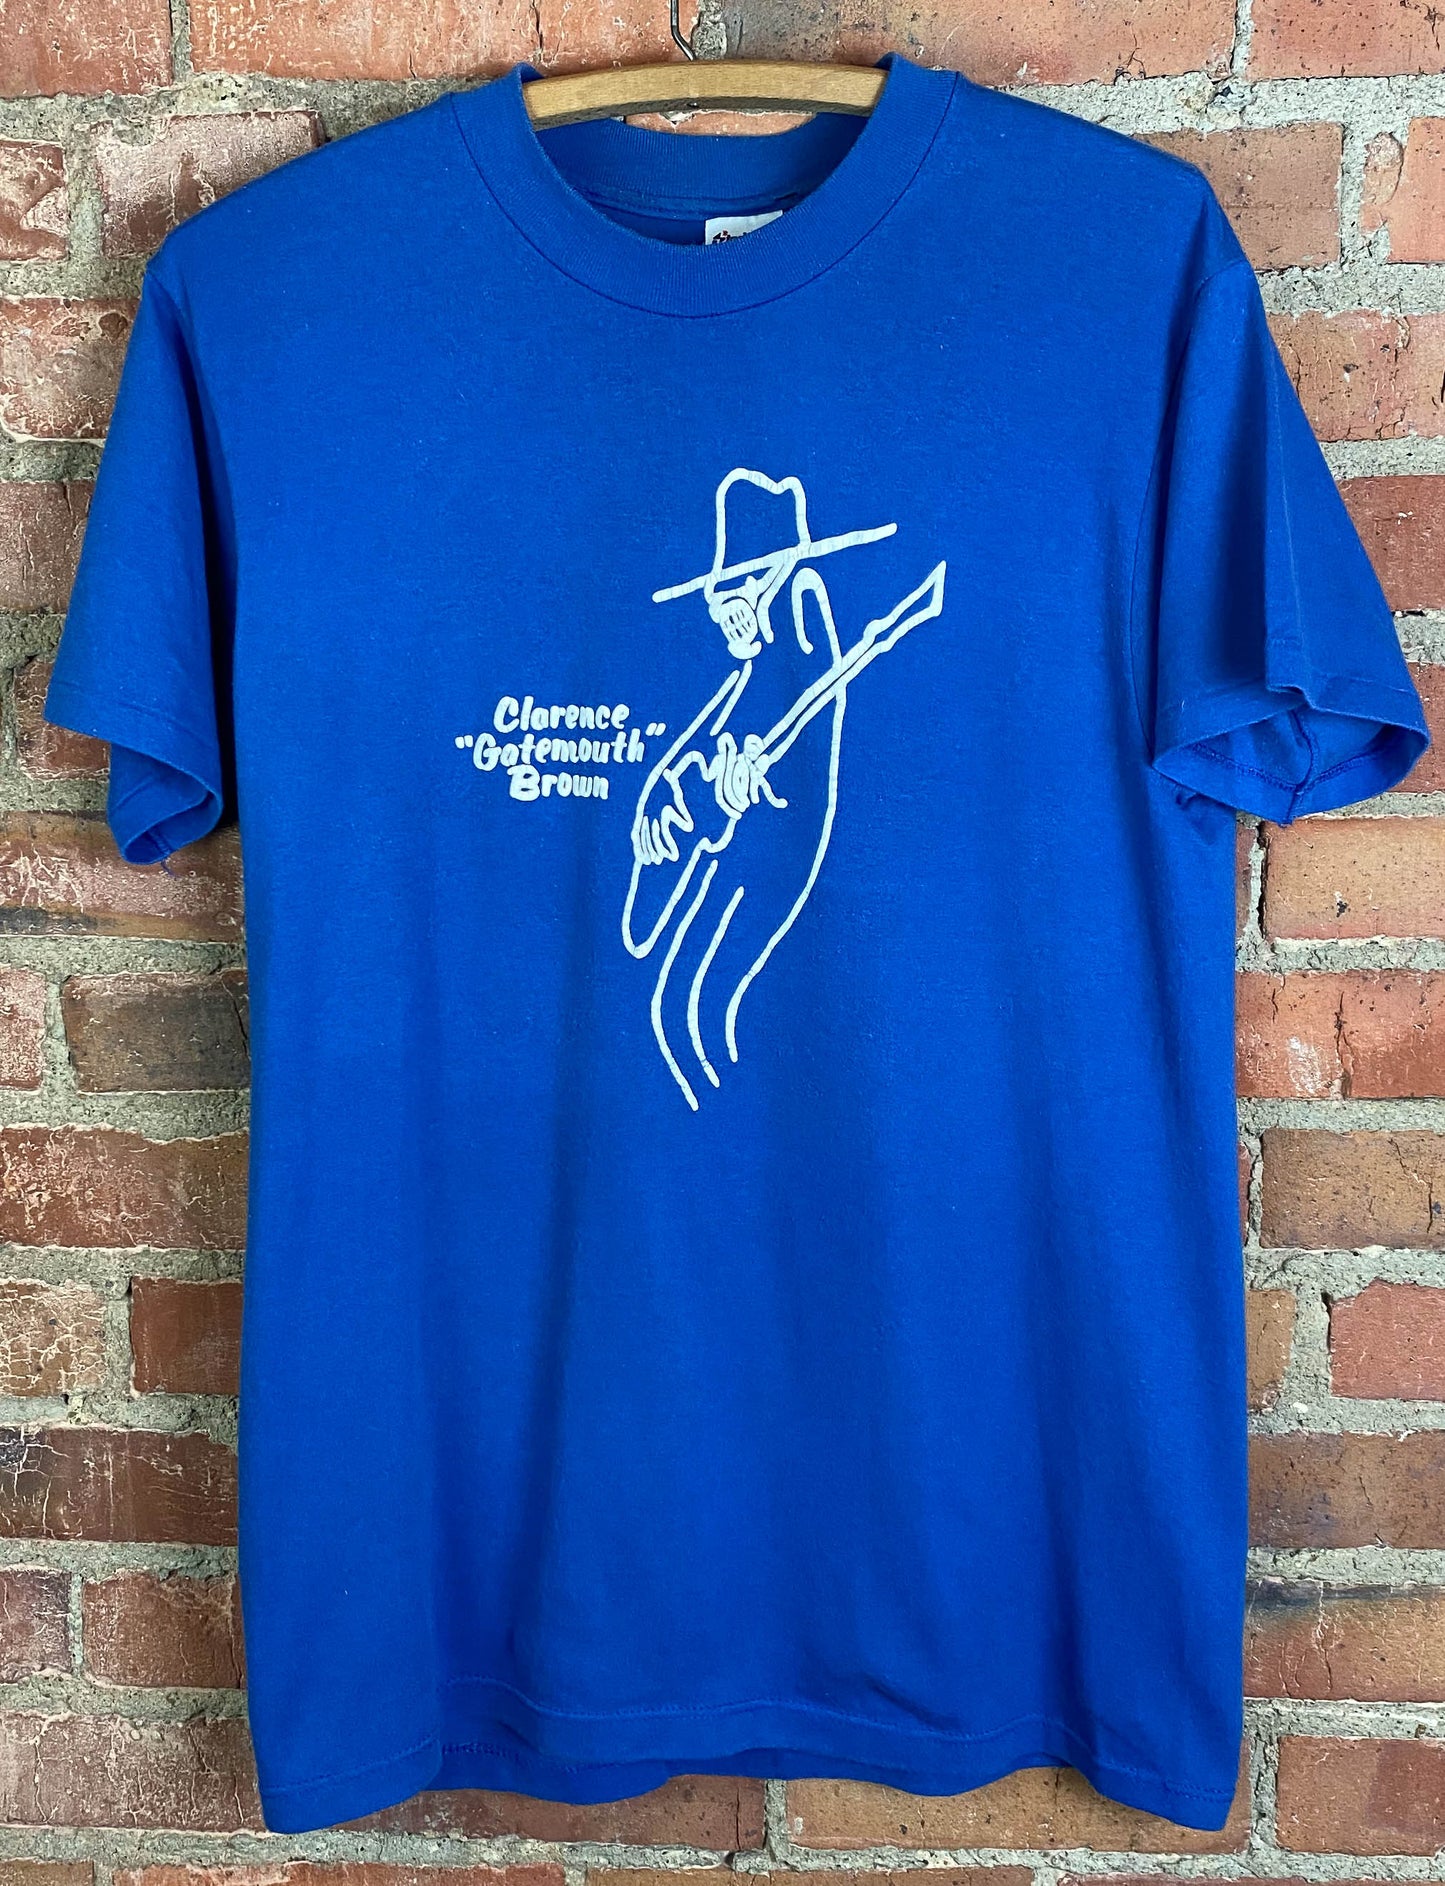 Vintage 90's Clarence "Gatemouth" Brown Concert T Shirt Blue Unisex Medium/Large